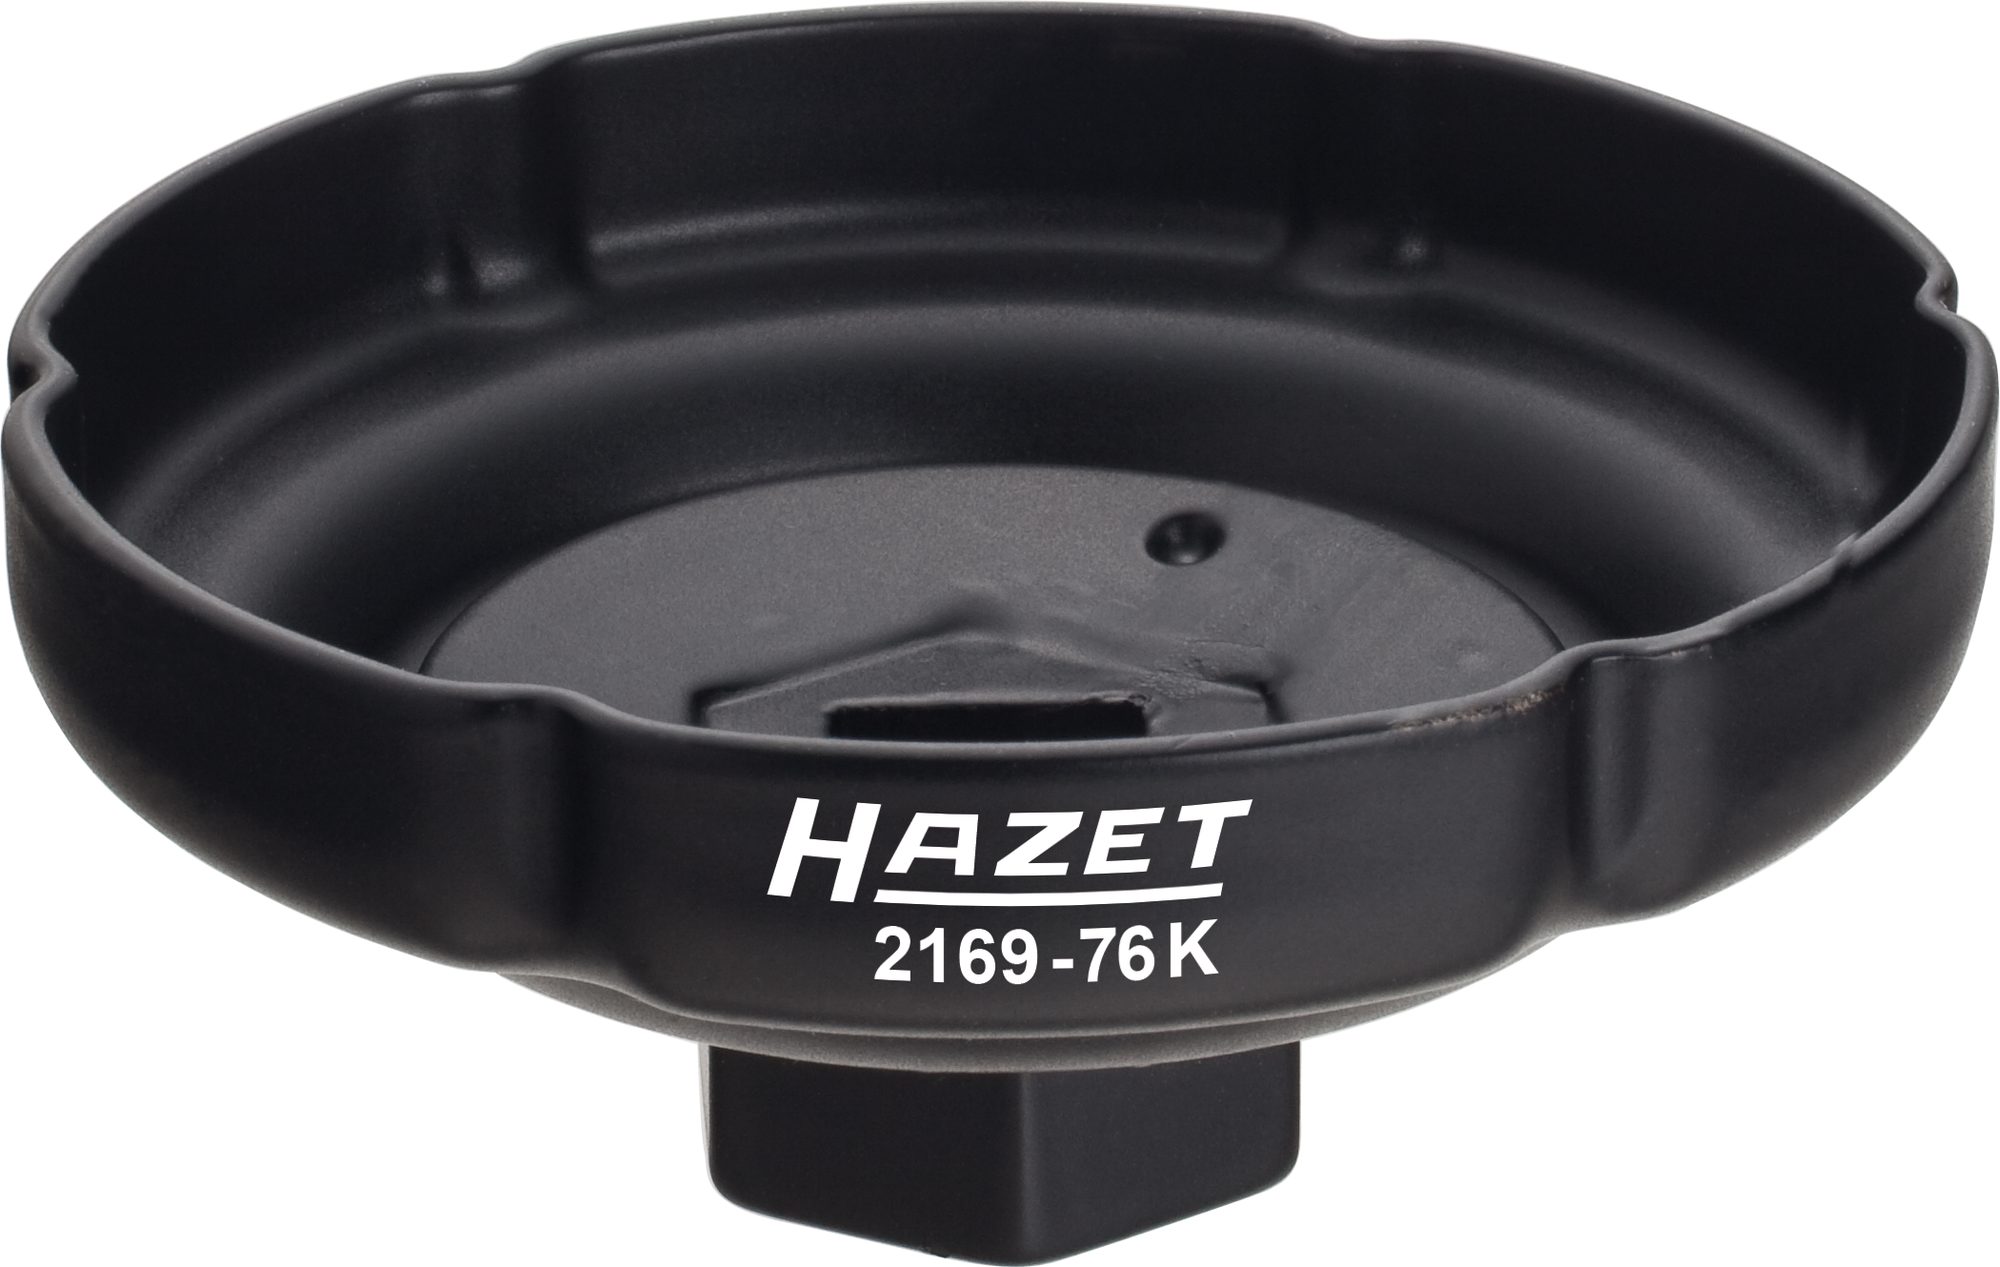 HAZET Ölfilter-Schlüssel 2169-1